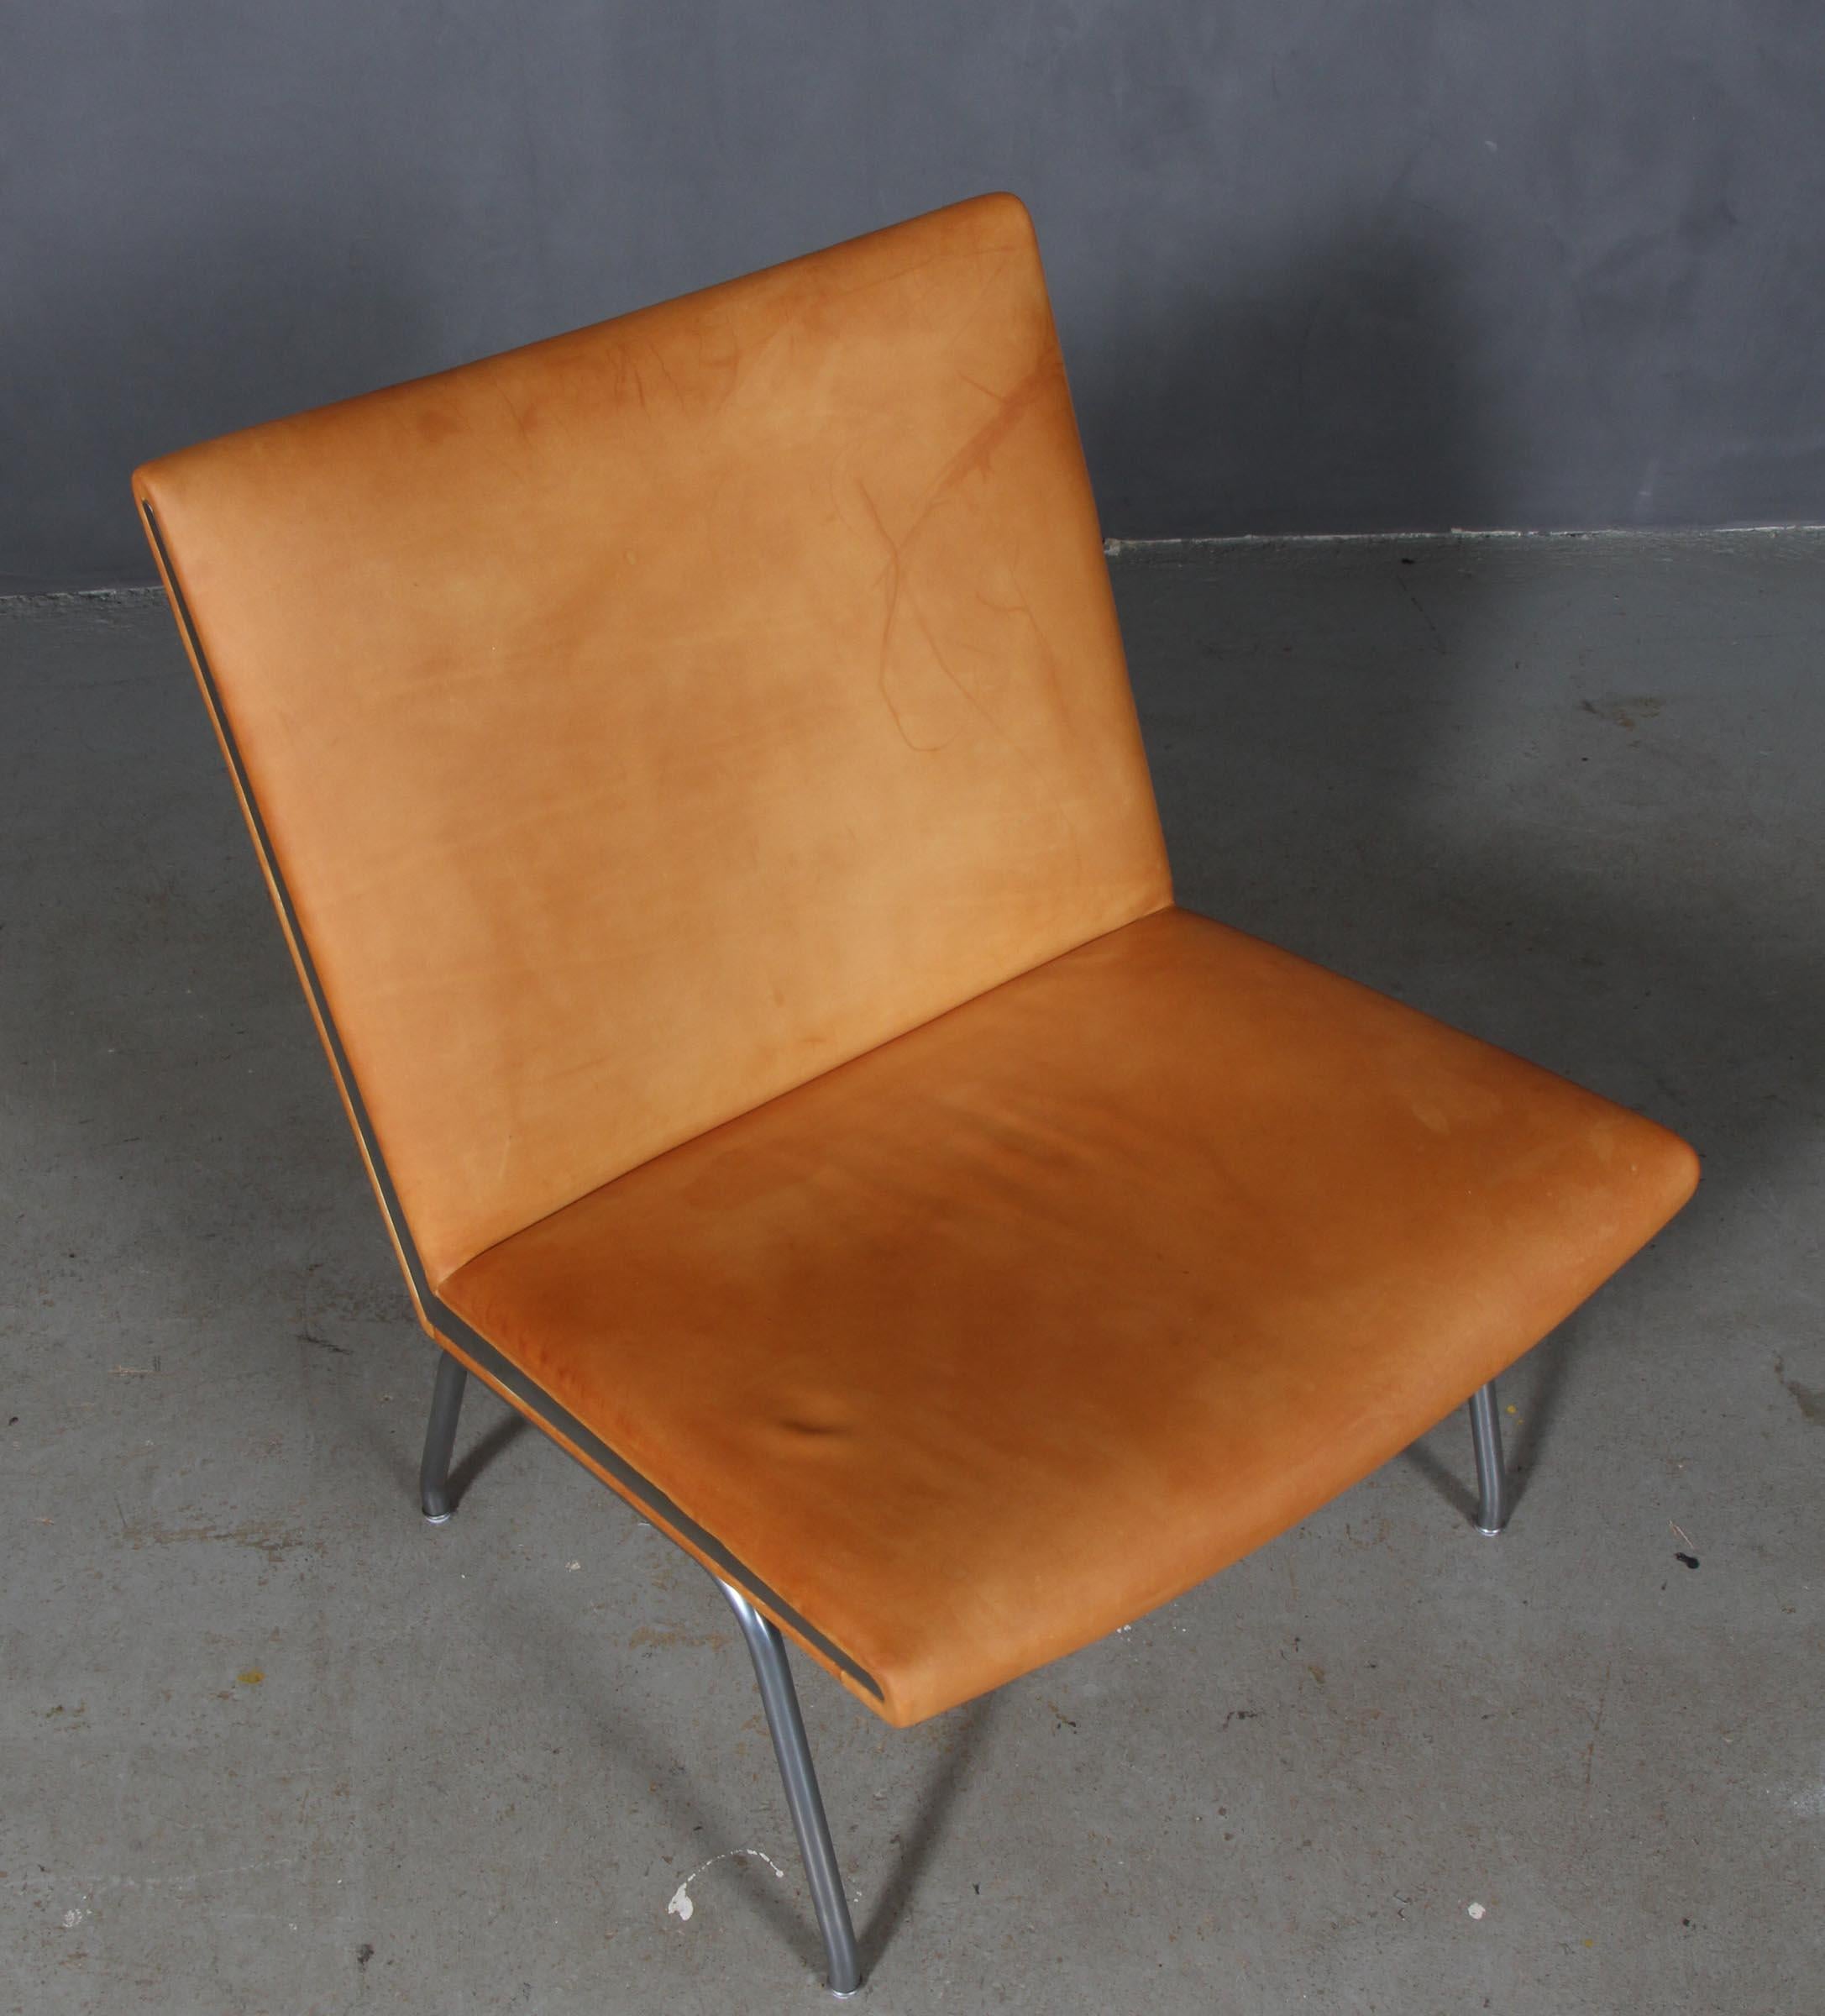 Hans J. Wegner lufthavnsttole designed for Kastrup Airport. Original upholstered with patinated nature leather.

Base and sides in steel.

Model AP40, made by AP stolen.